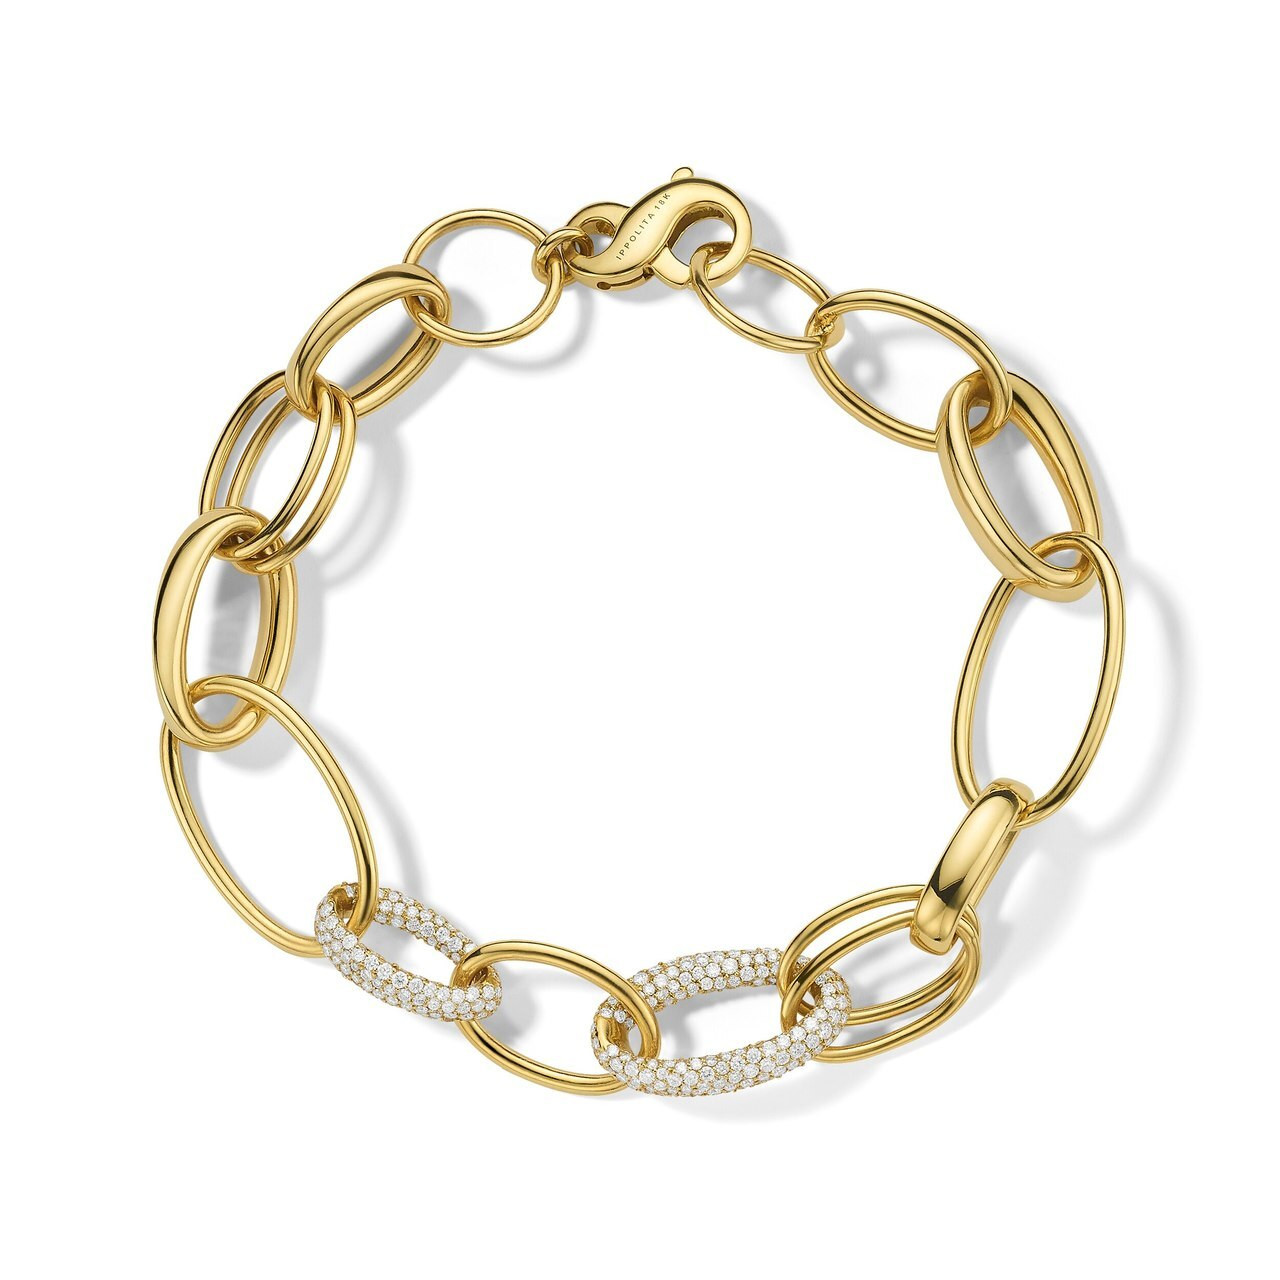 IPPOLITA Stardust Link Bracelet in 18K Gold with Diamonds